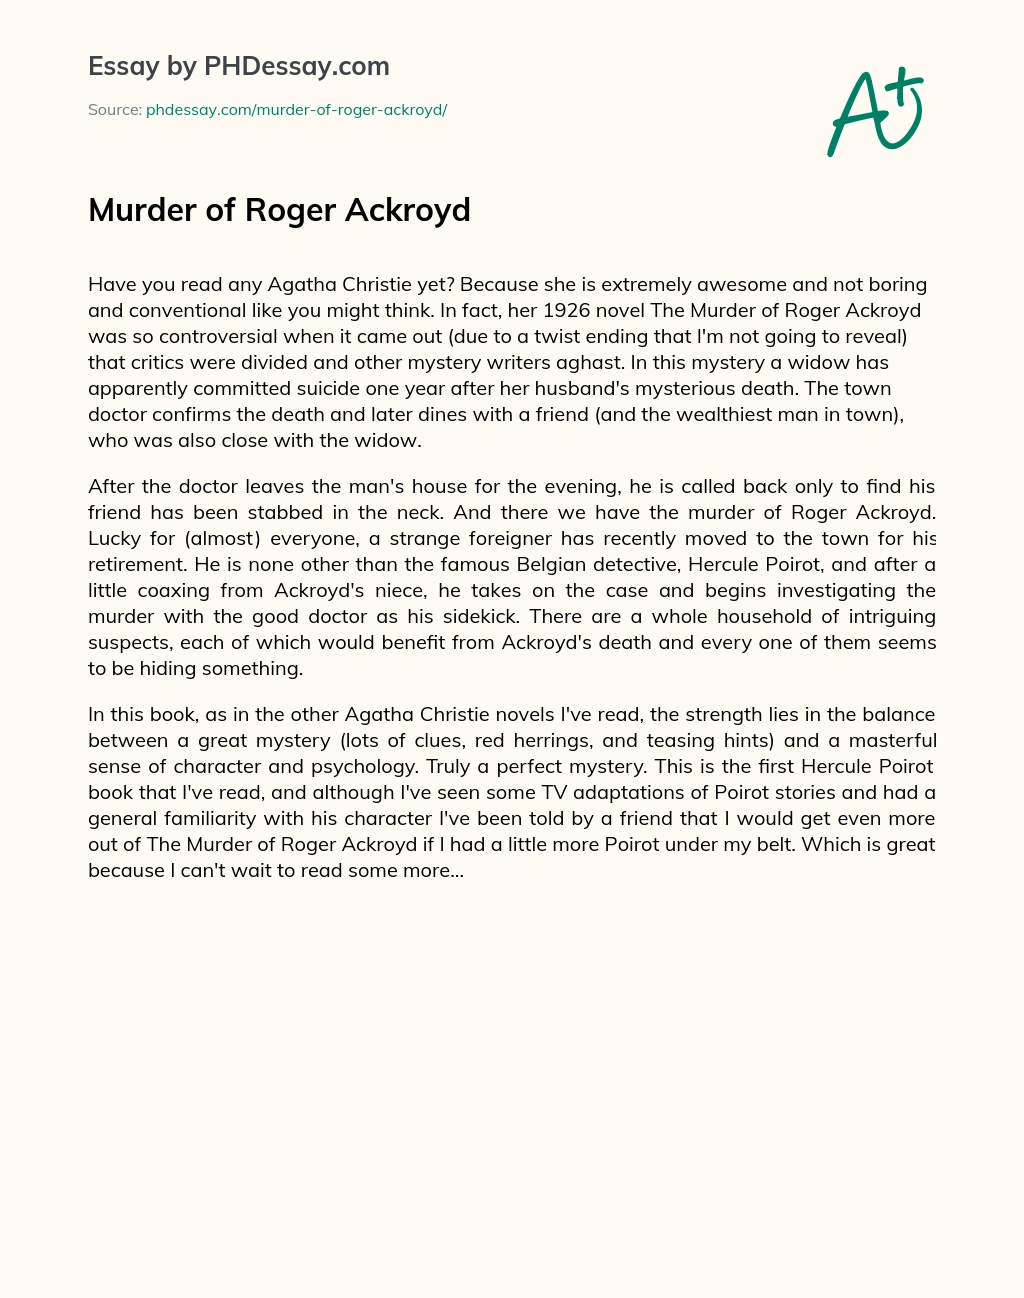 Murder of Roger Ackroyd essay